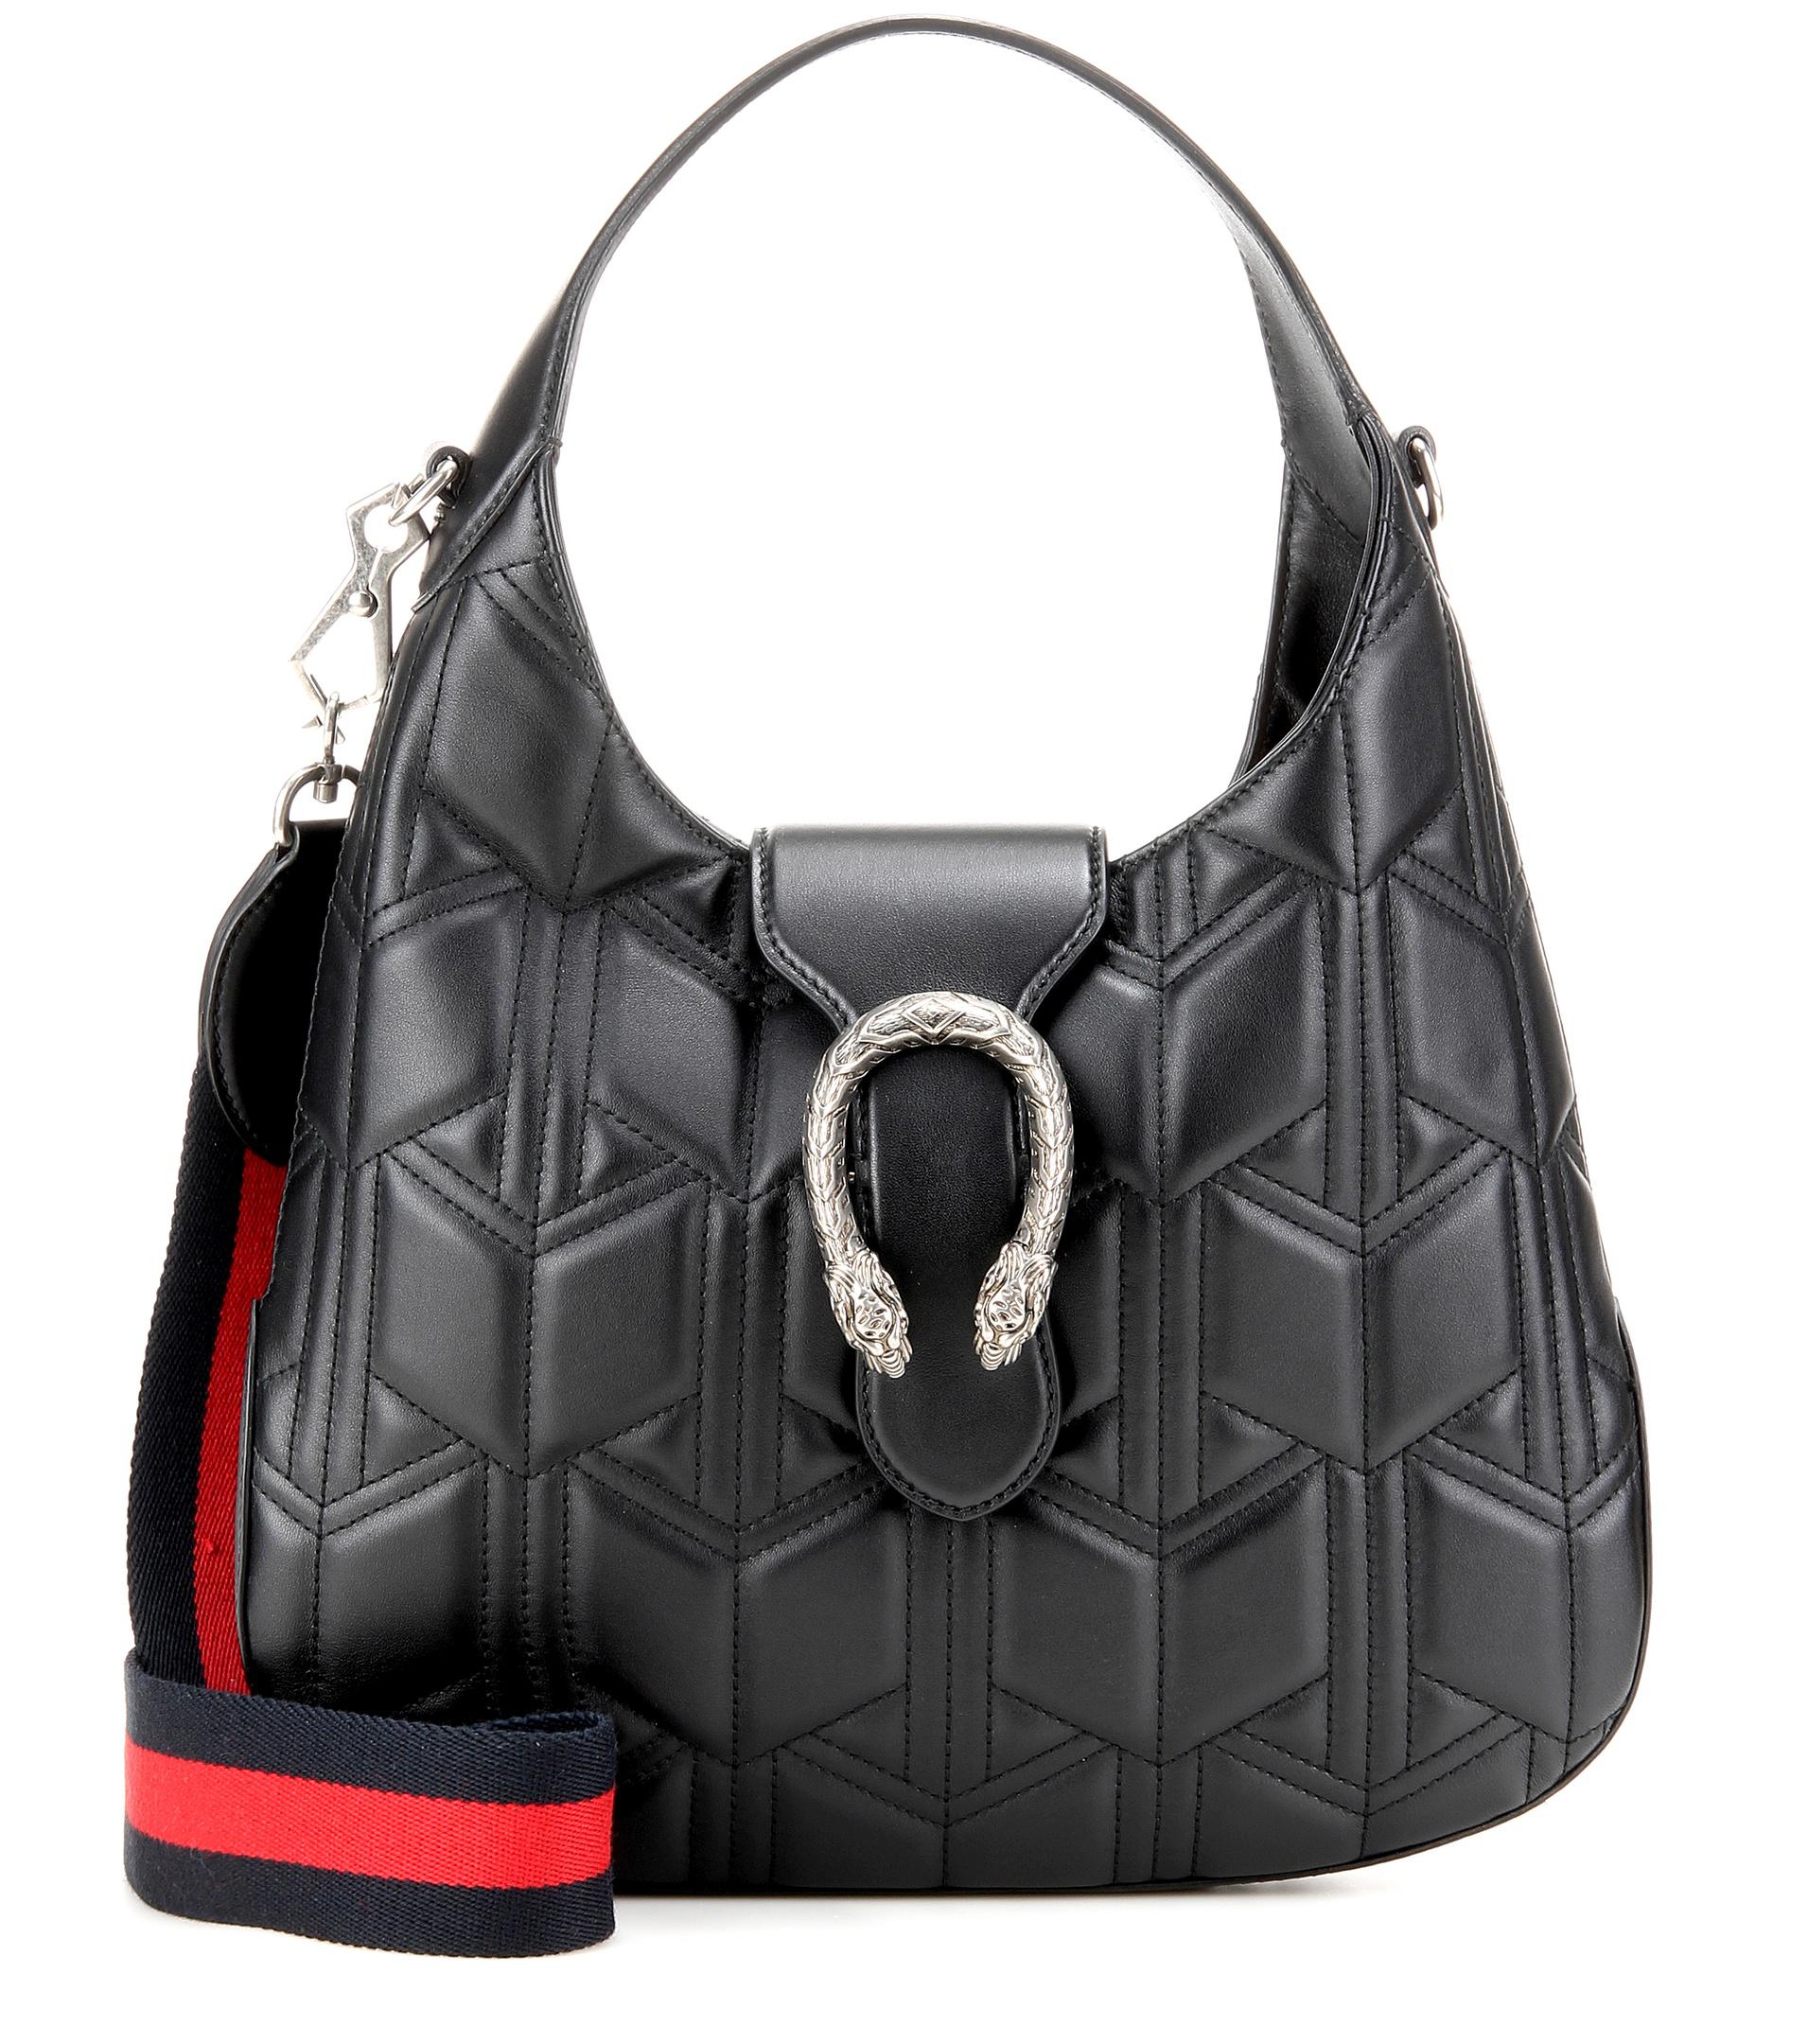 Lyst - Gucci Dionysus Matelassé Leather Hobo Shoulder Bag in Black